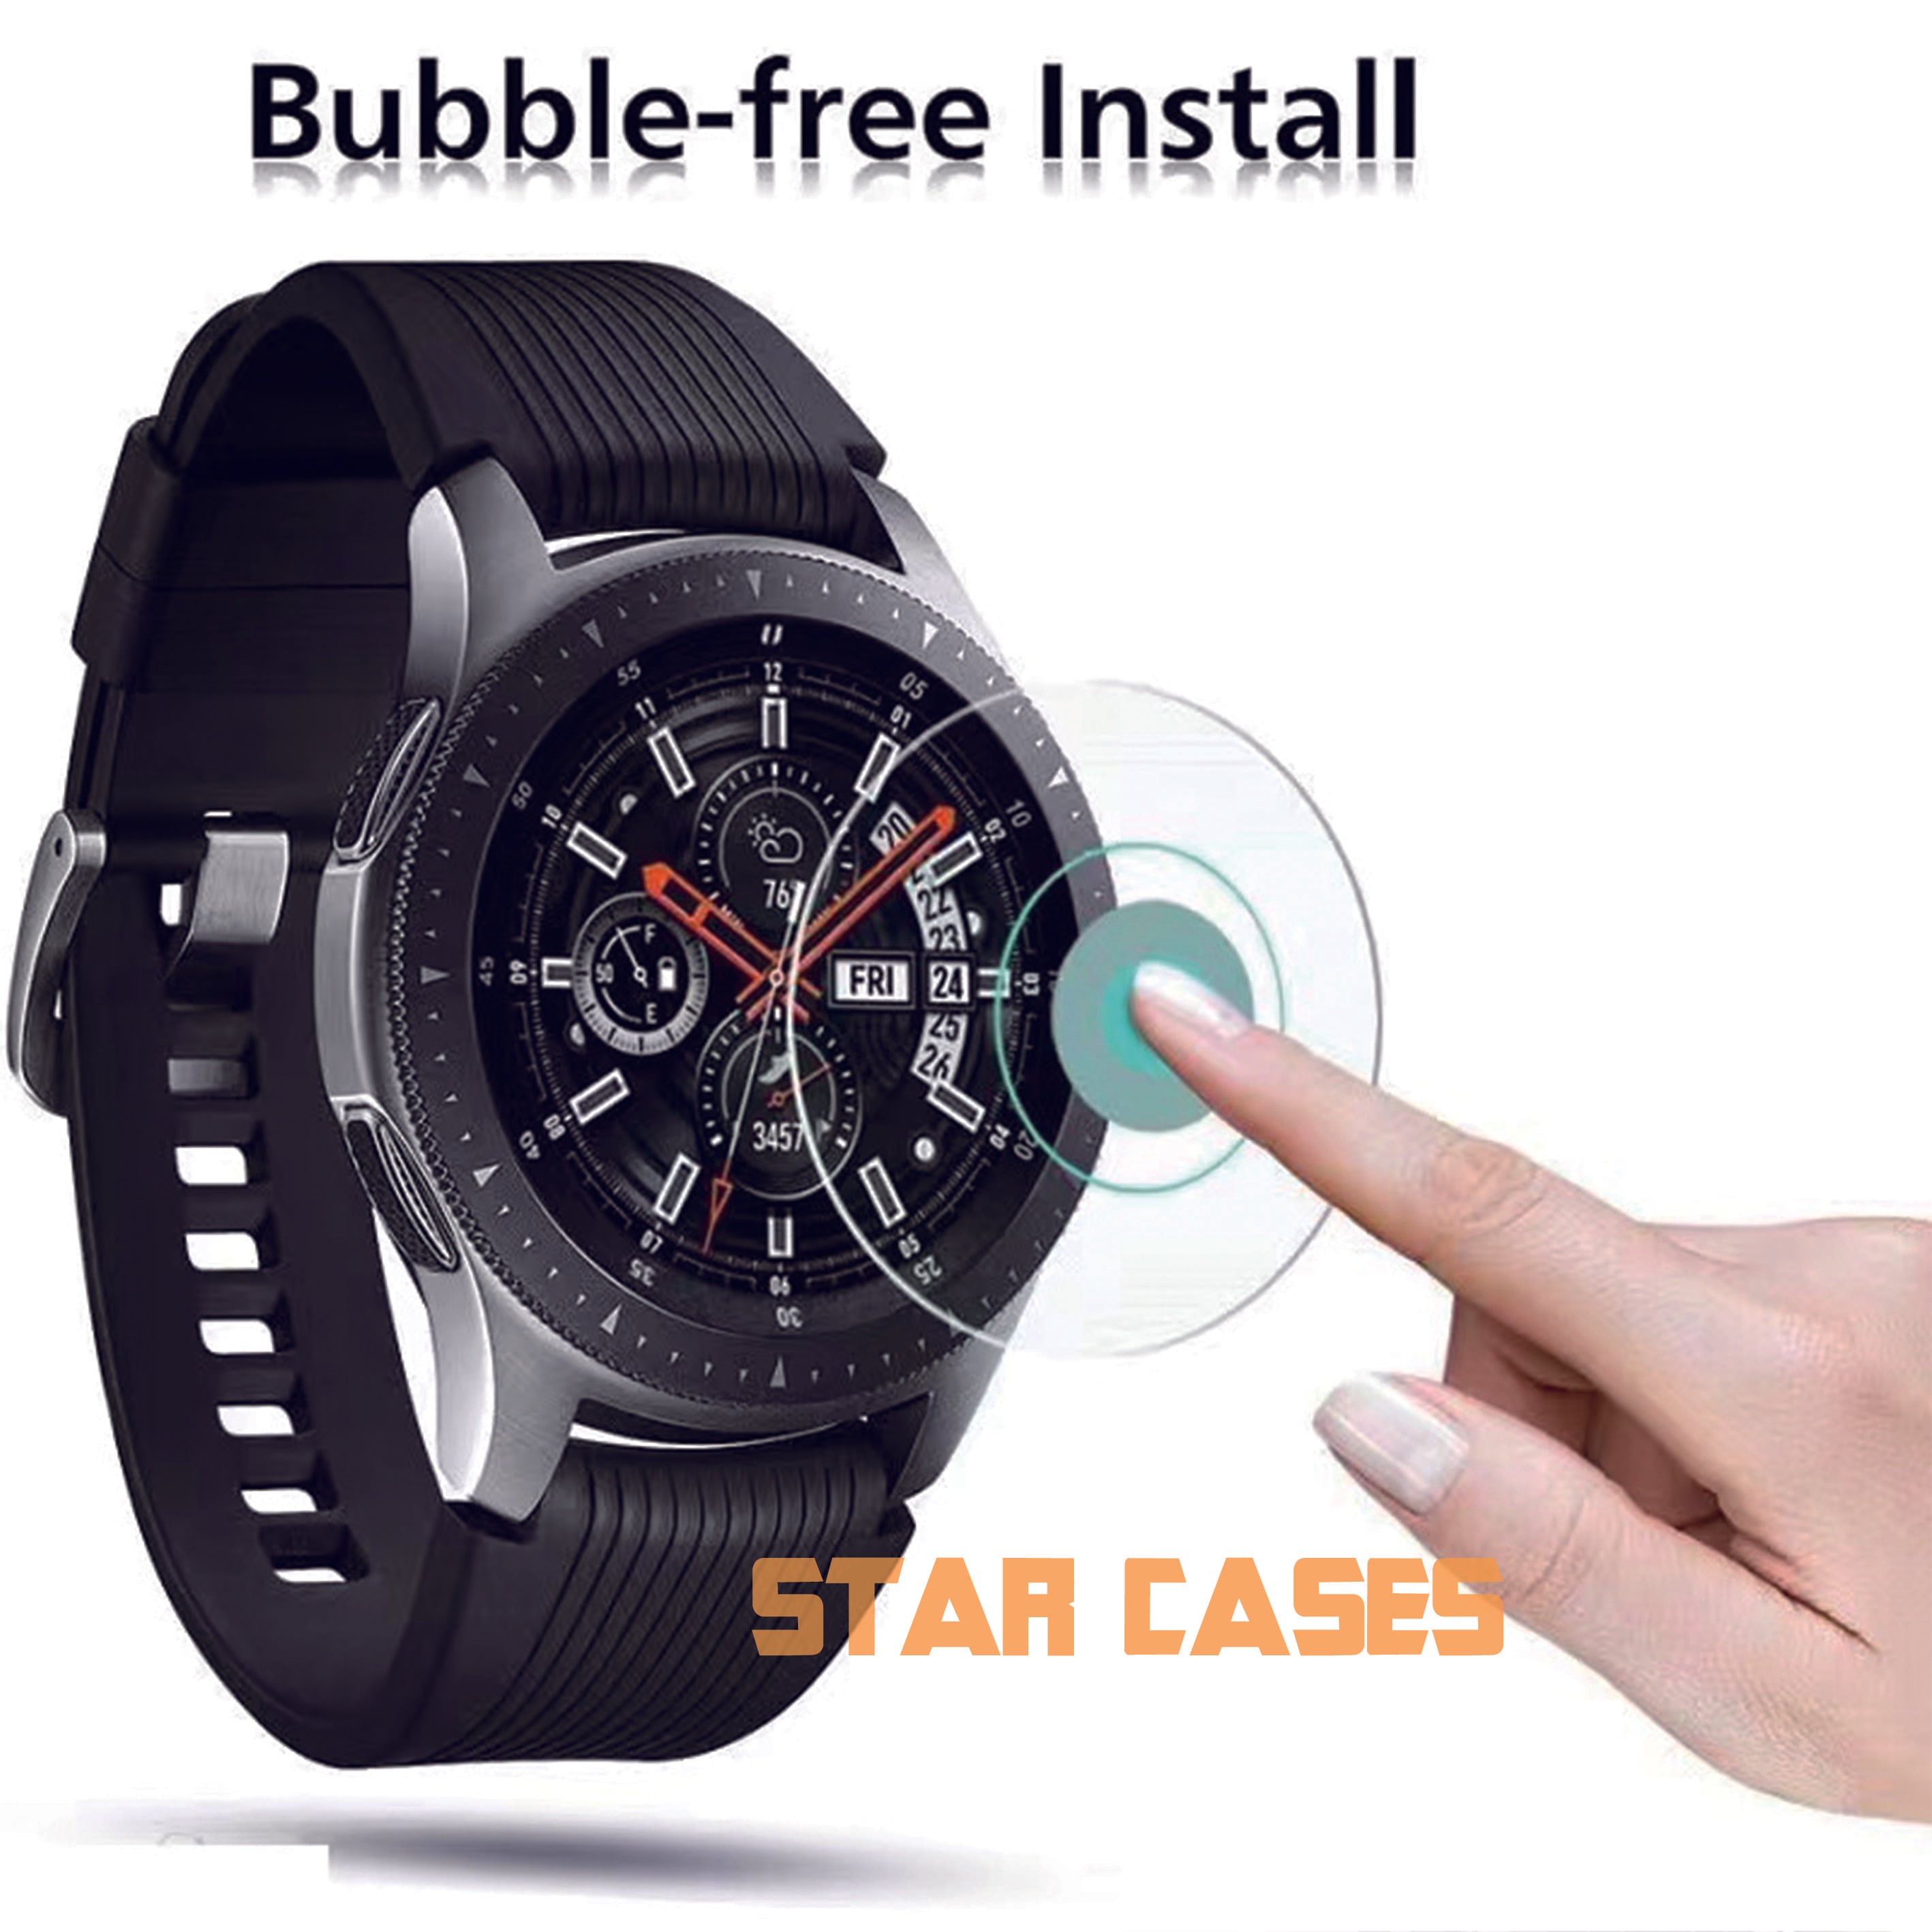 Samsung watch glass screen protector